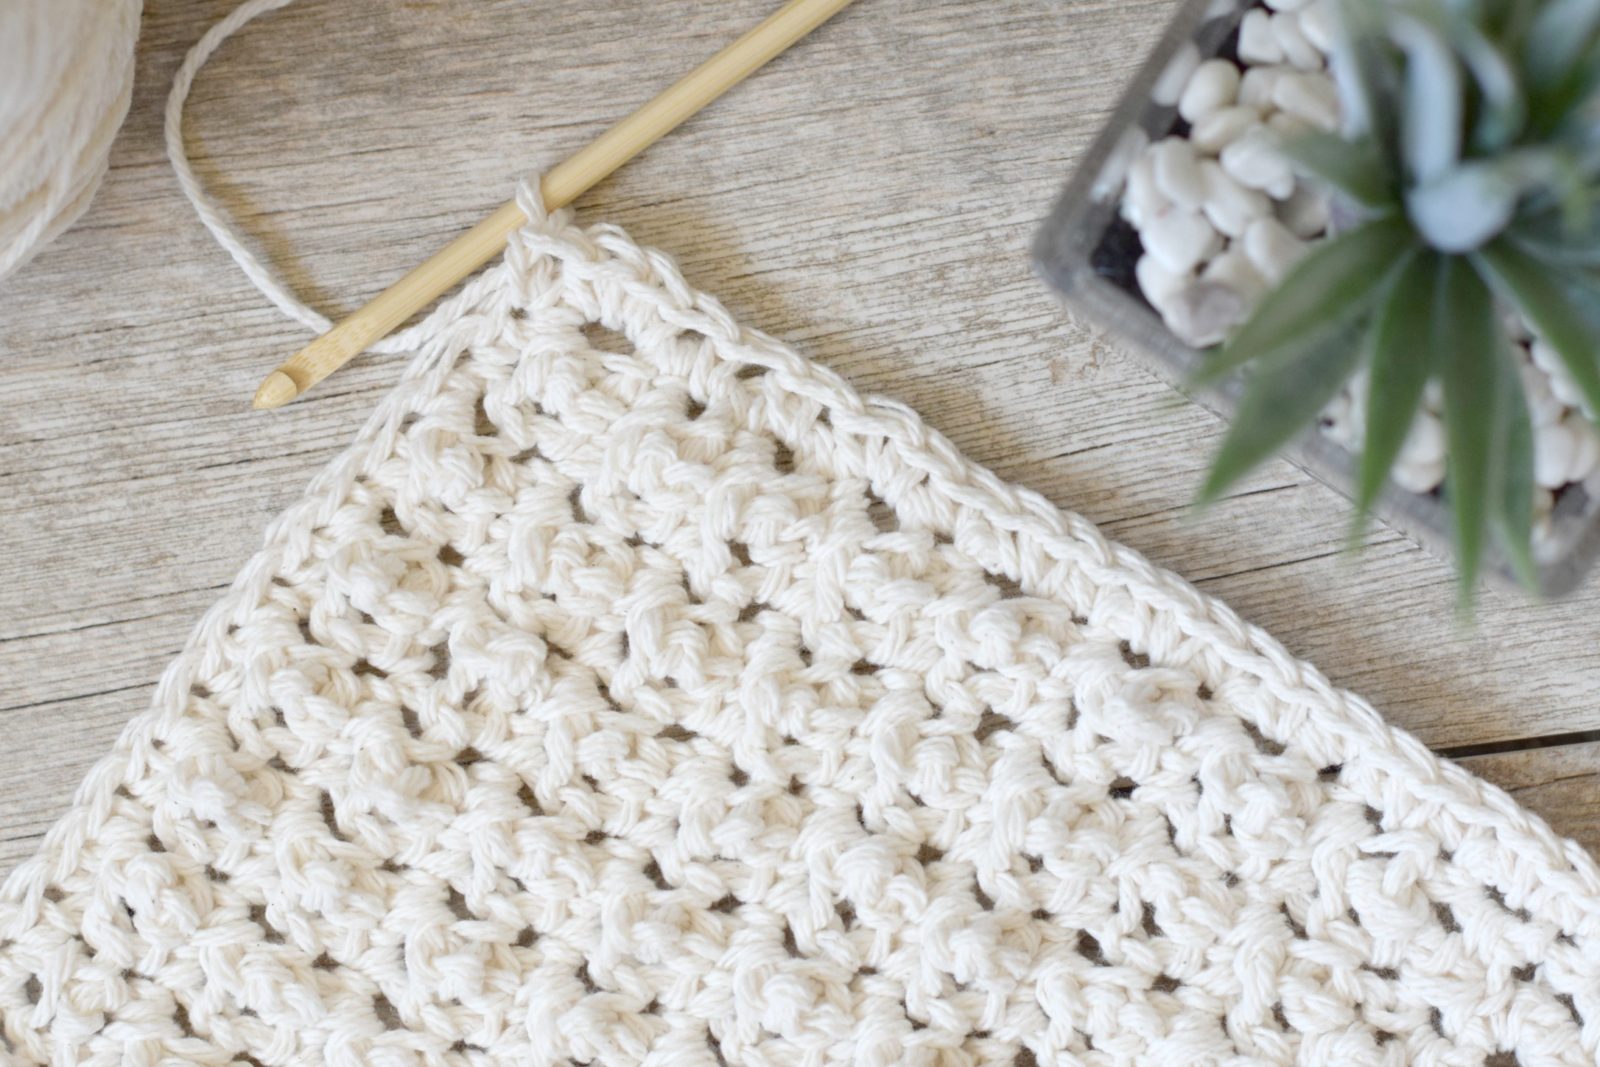 My Hobby Is Crochet: Easy Crochet Dishcloth